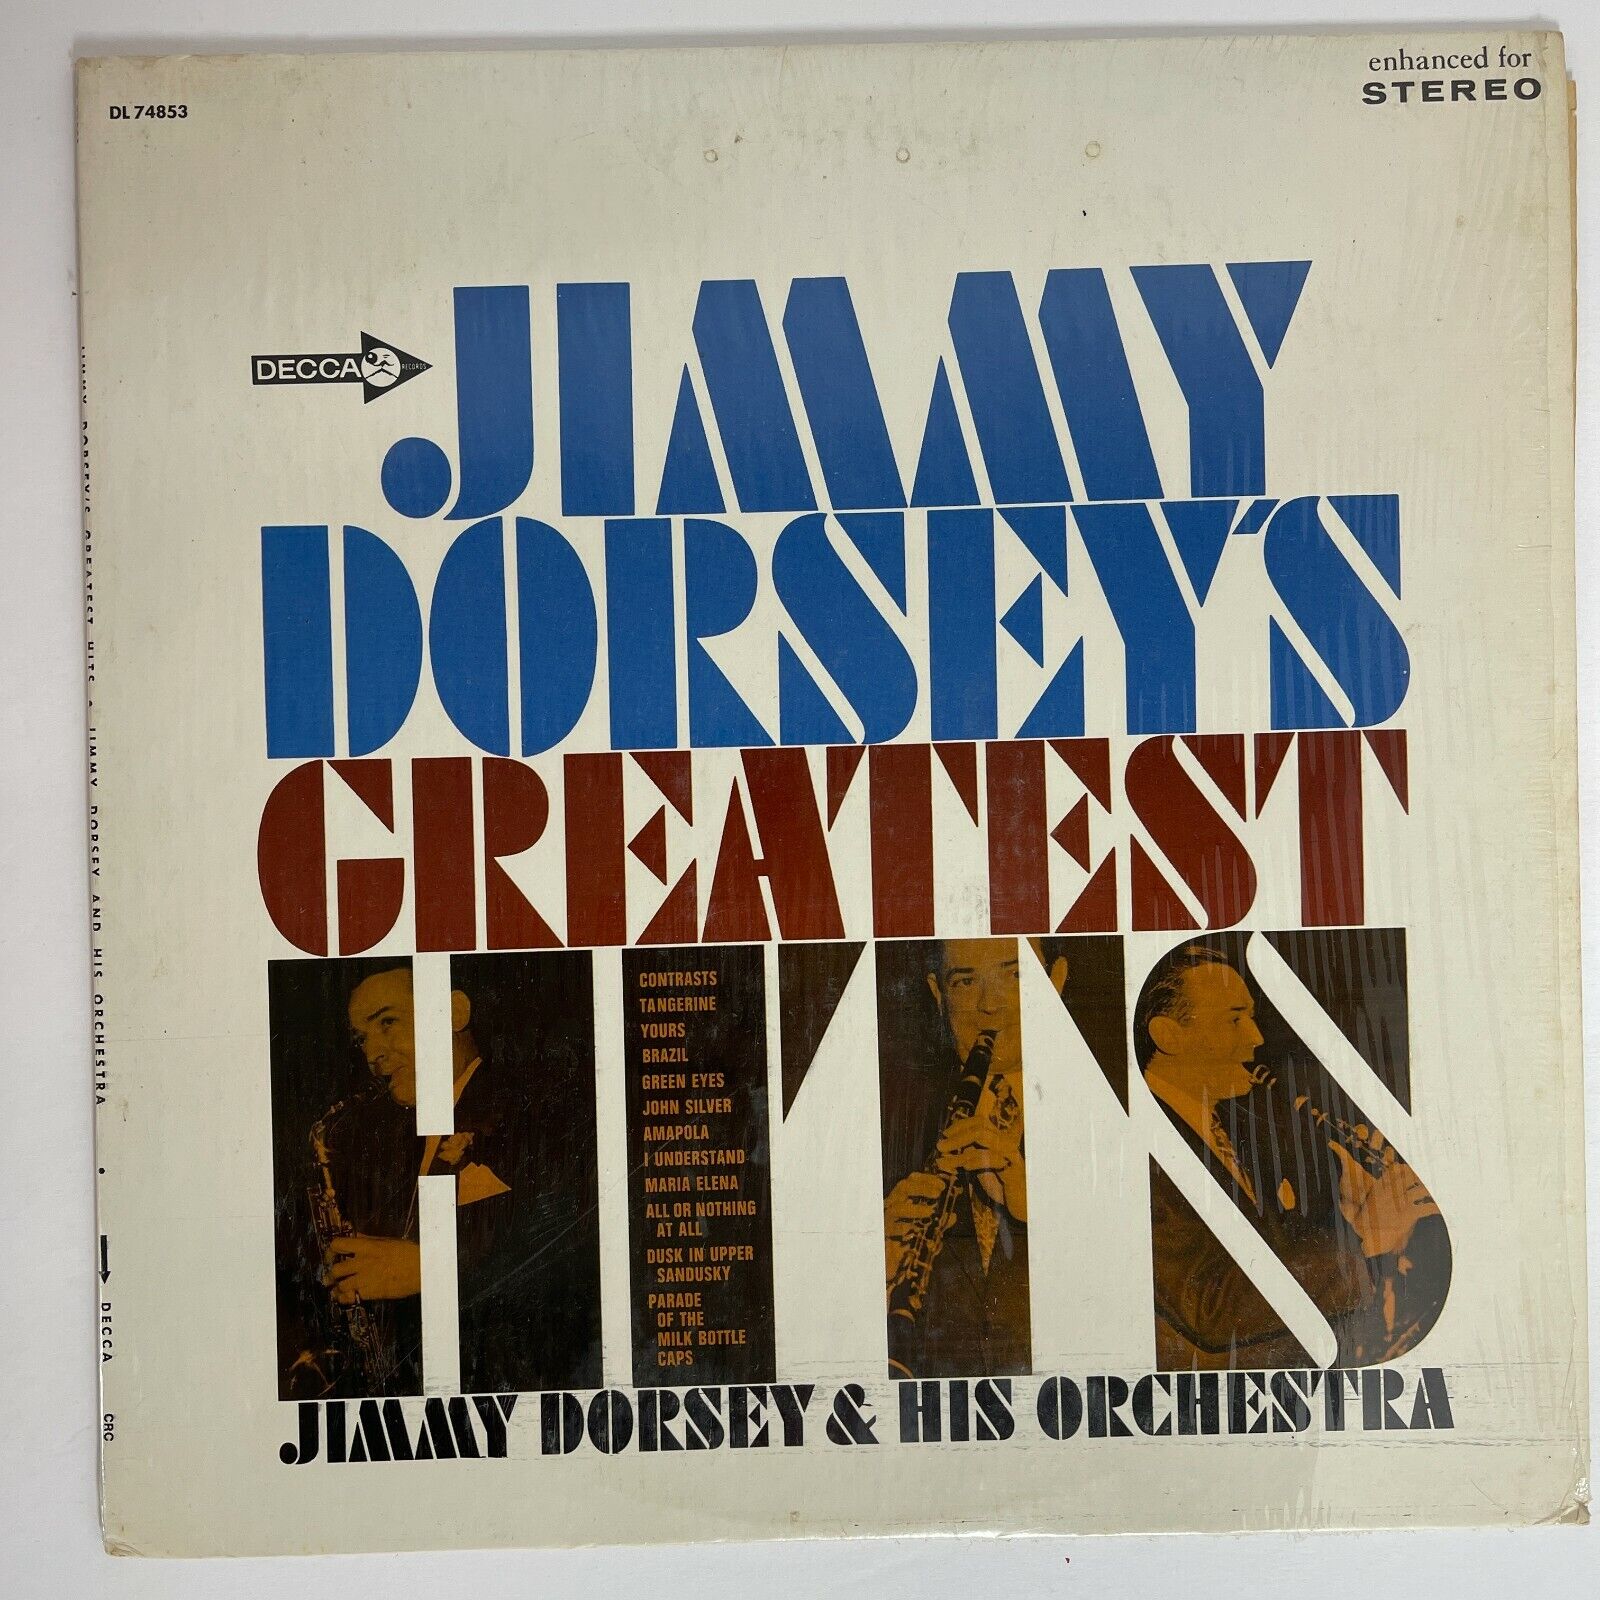 Jimmy Dorsey's Greatest Hits Vinyl, LP Decca ‎– DL 74853  